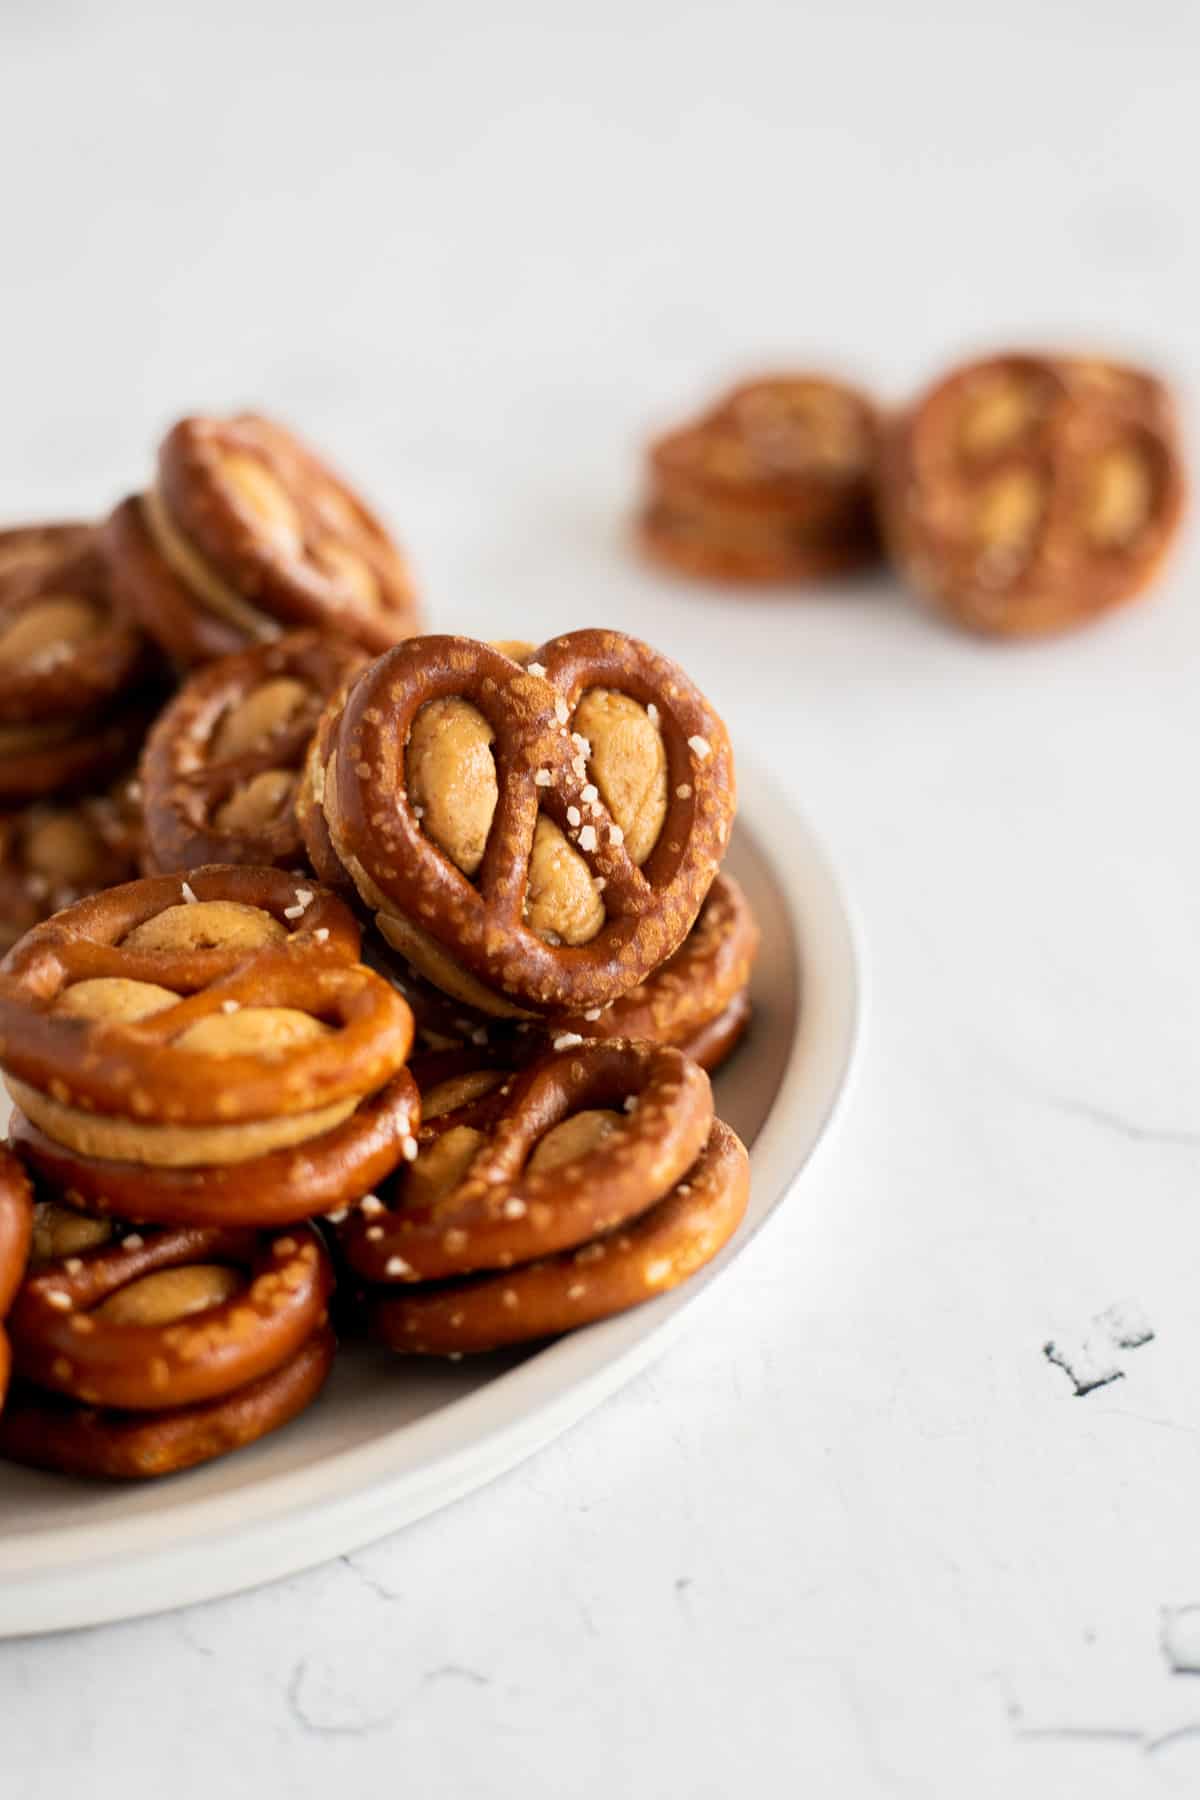 mini pretzel twists with peanut butter smushed between them.